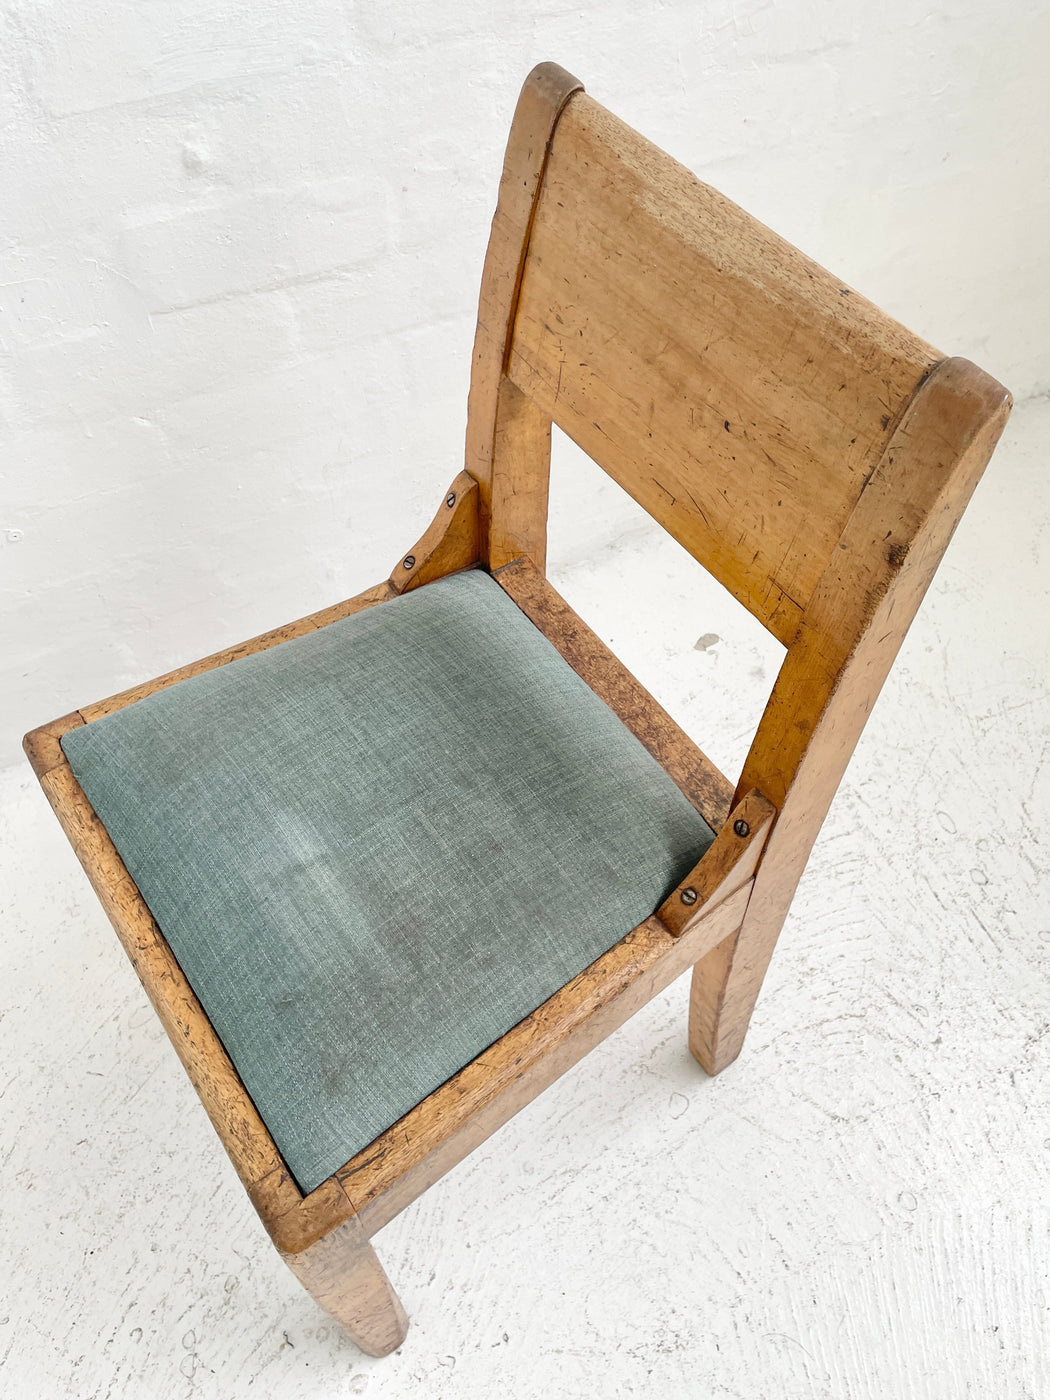 Australian Early-Modern Chair